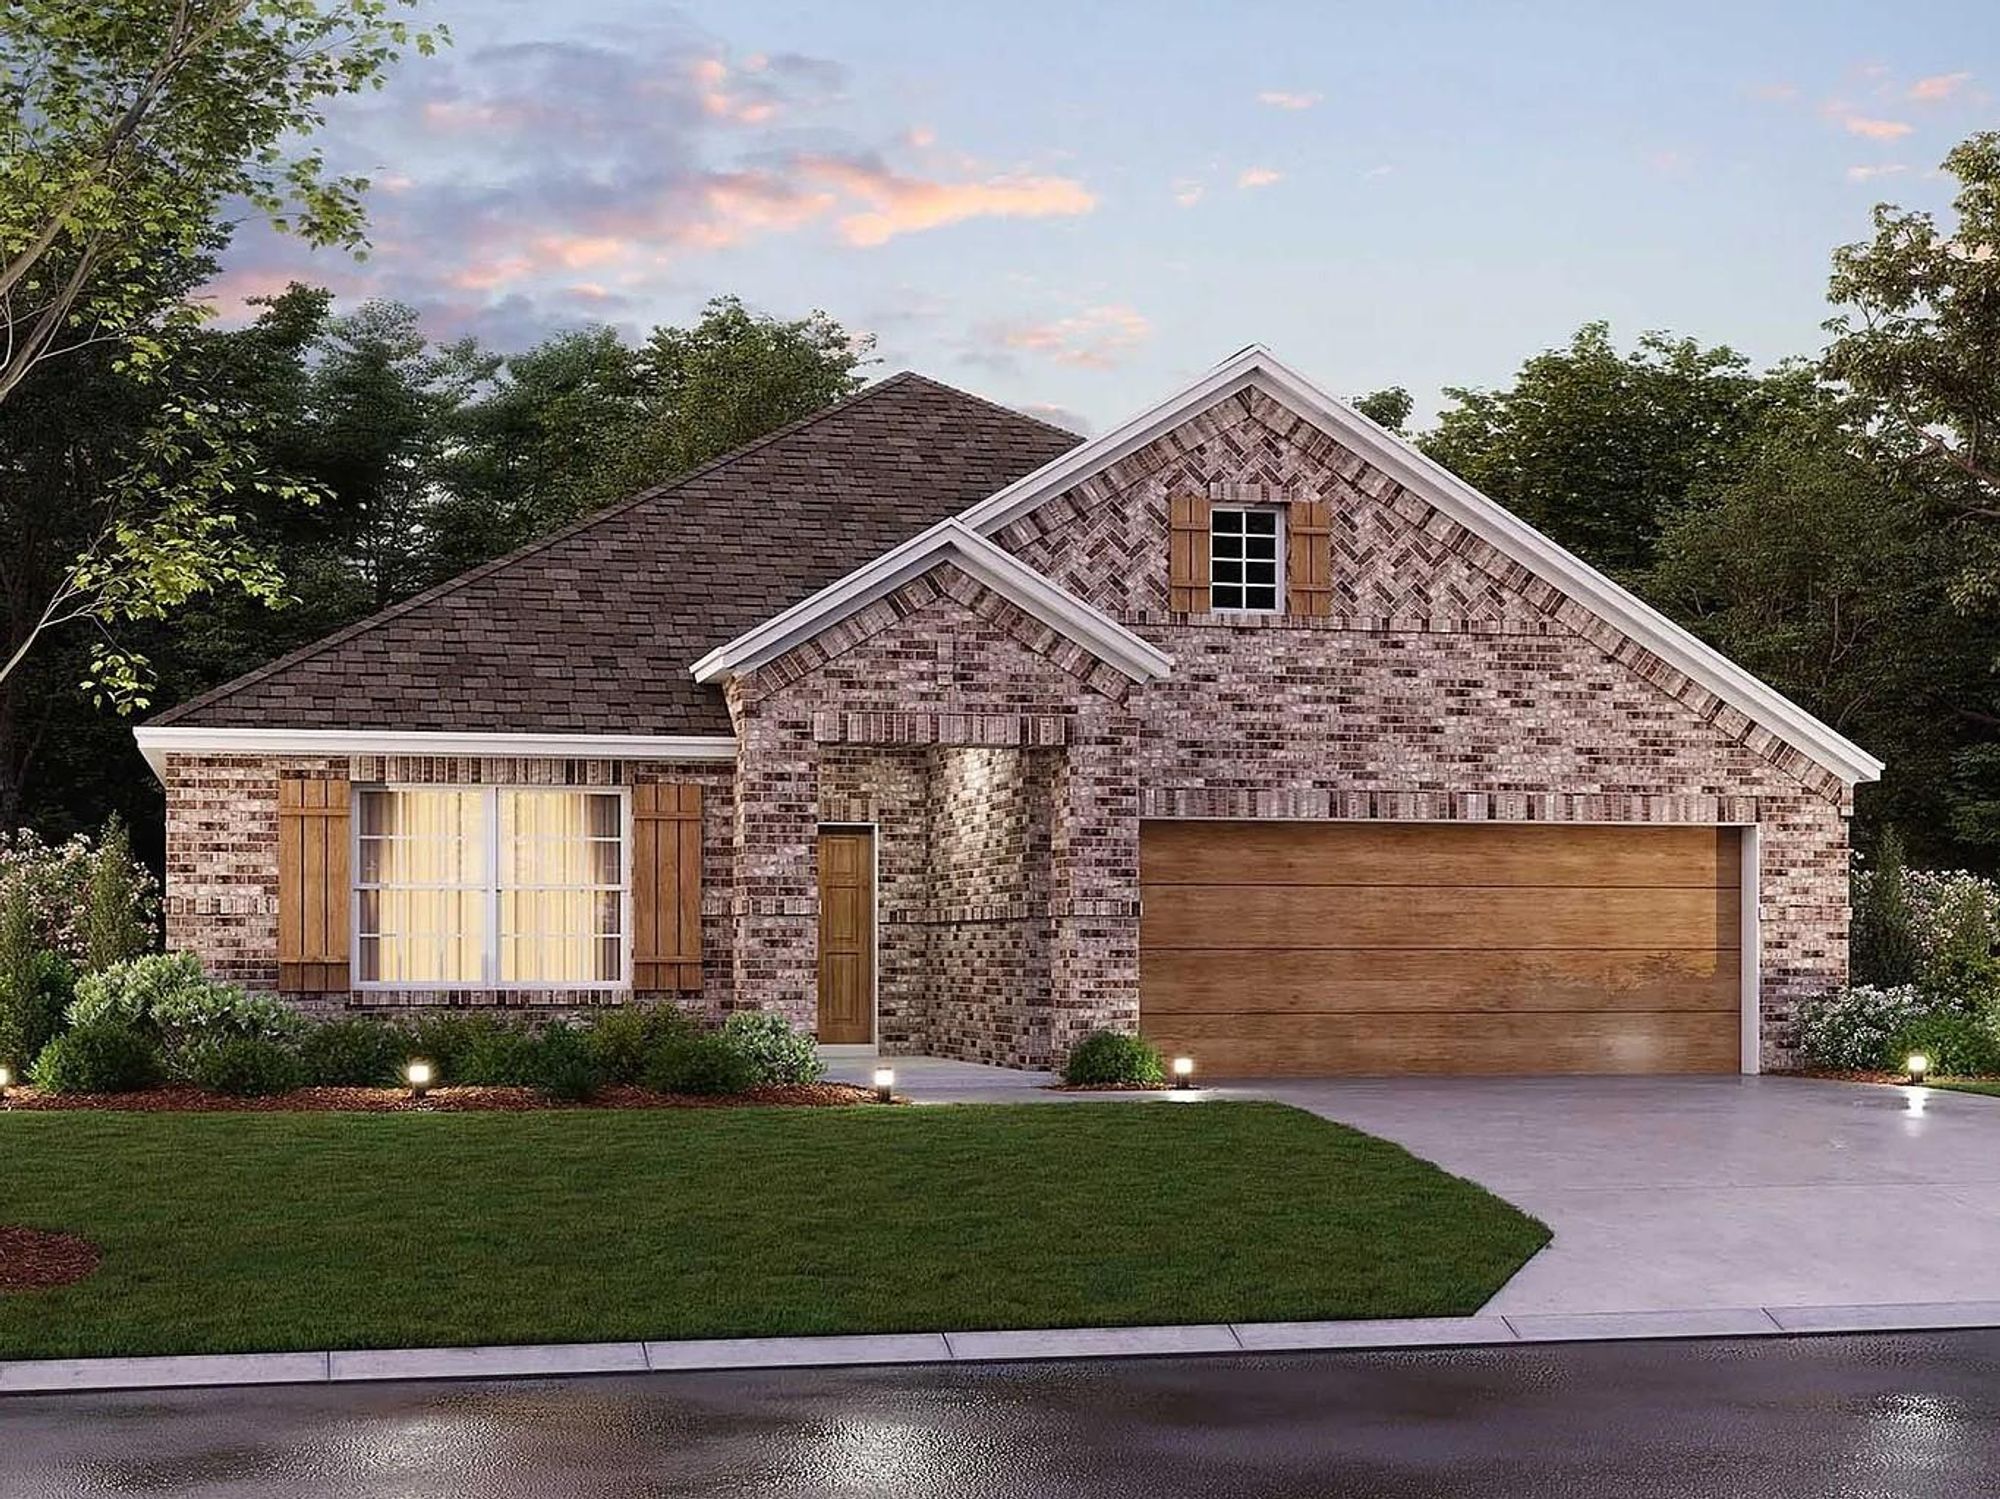 Esparanza new home build, Copper Creek, Fort Worth